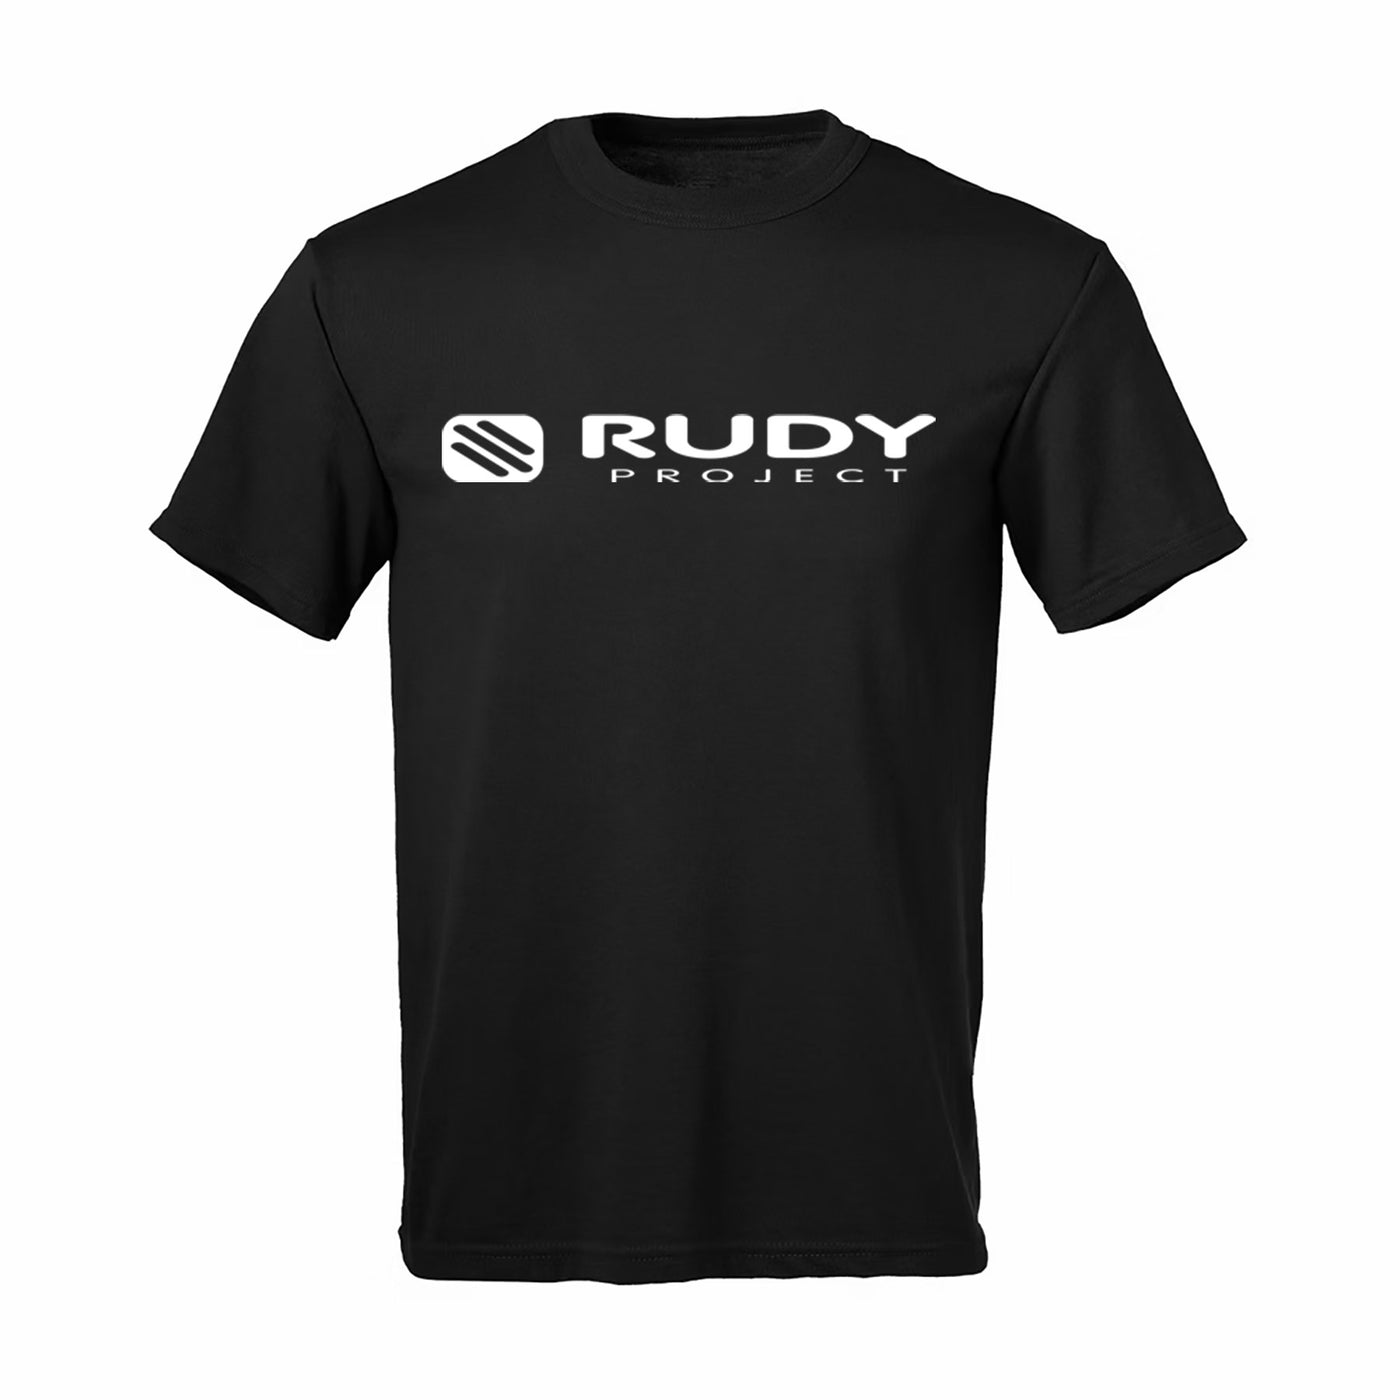 Rudy Project Black T-Shirt